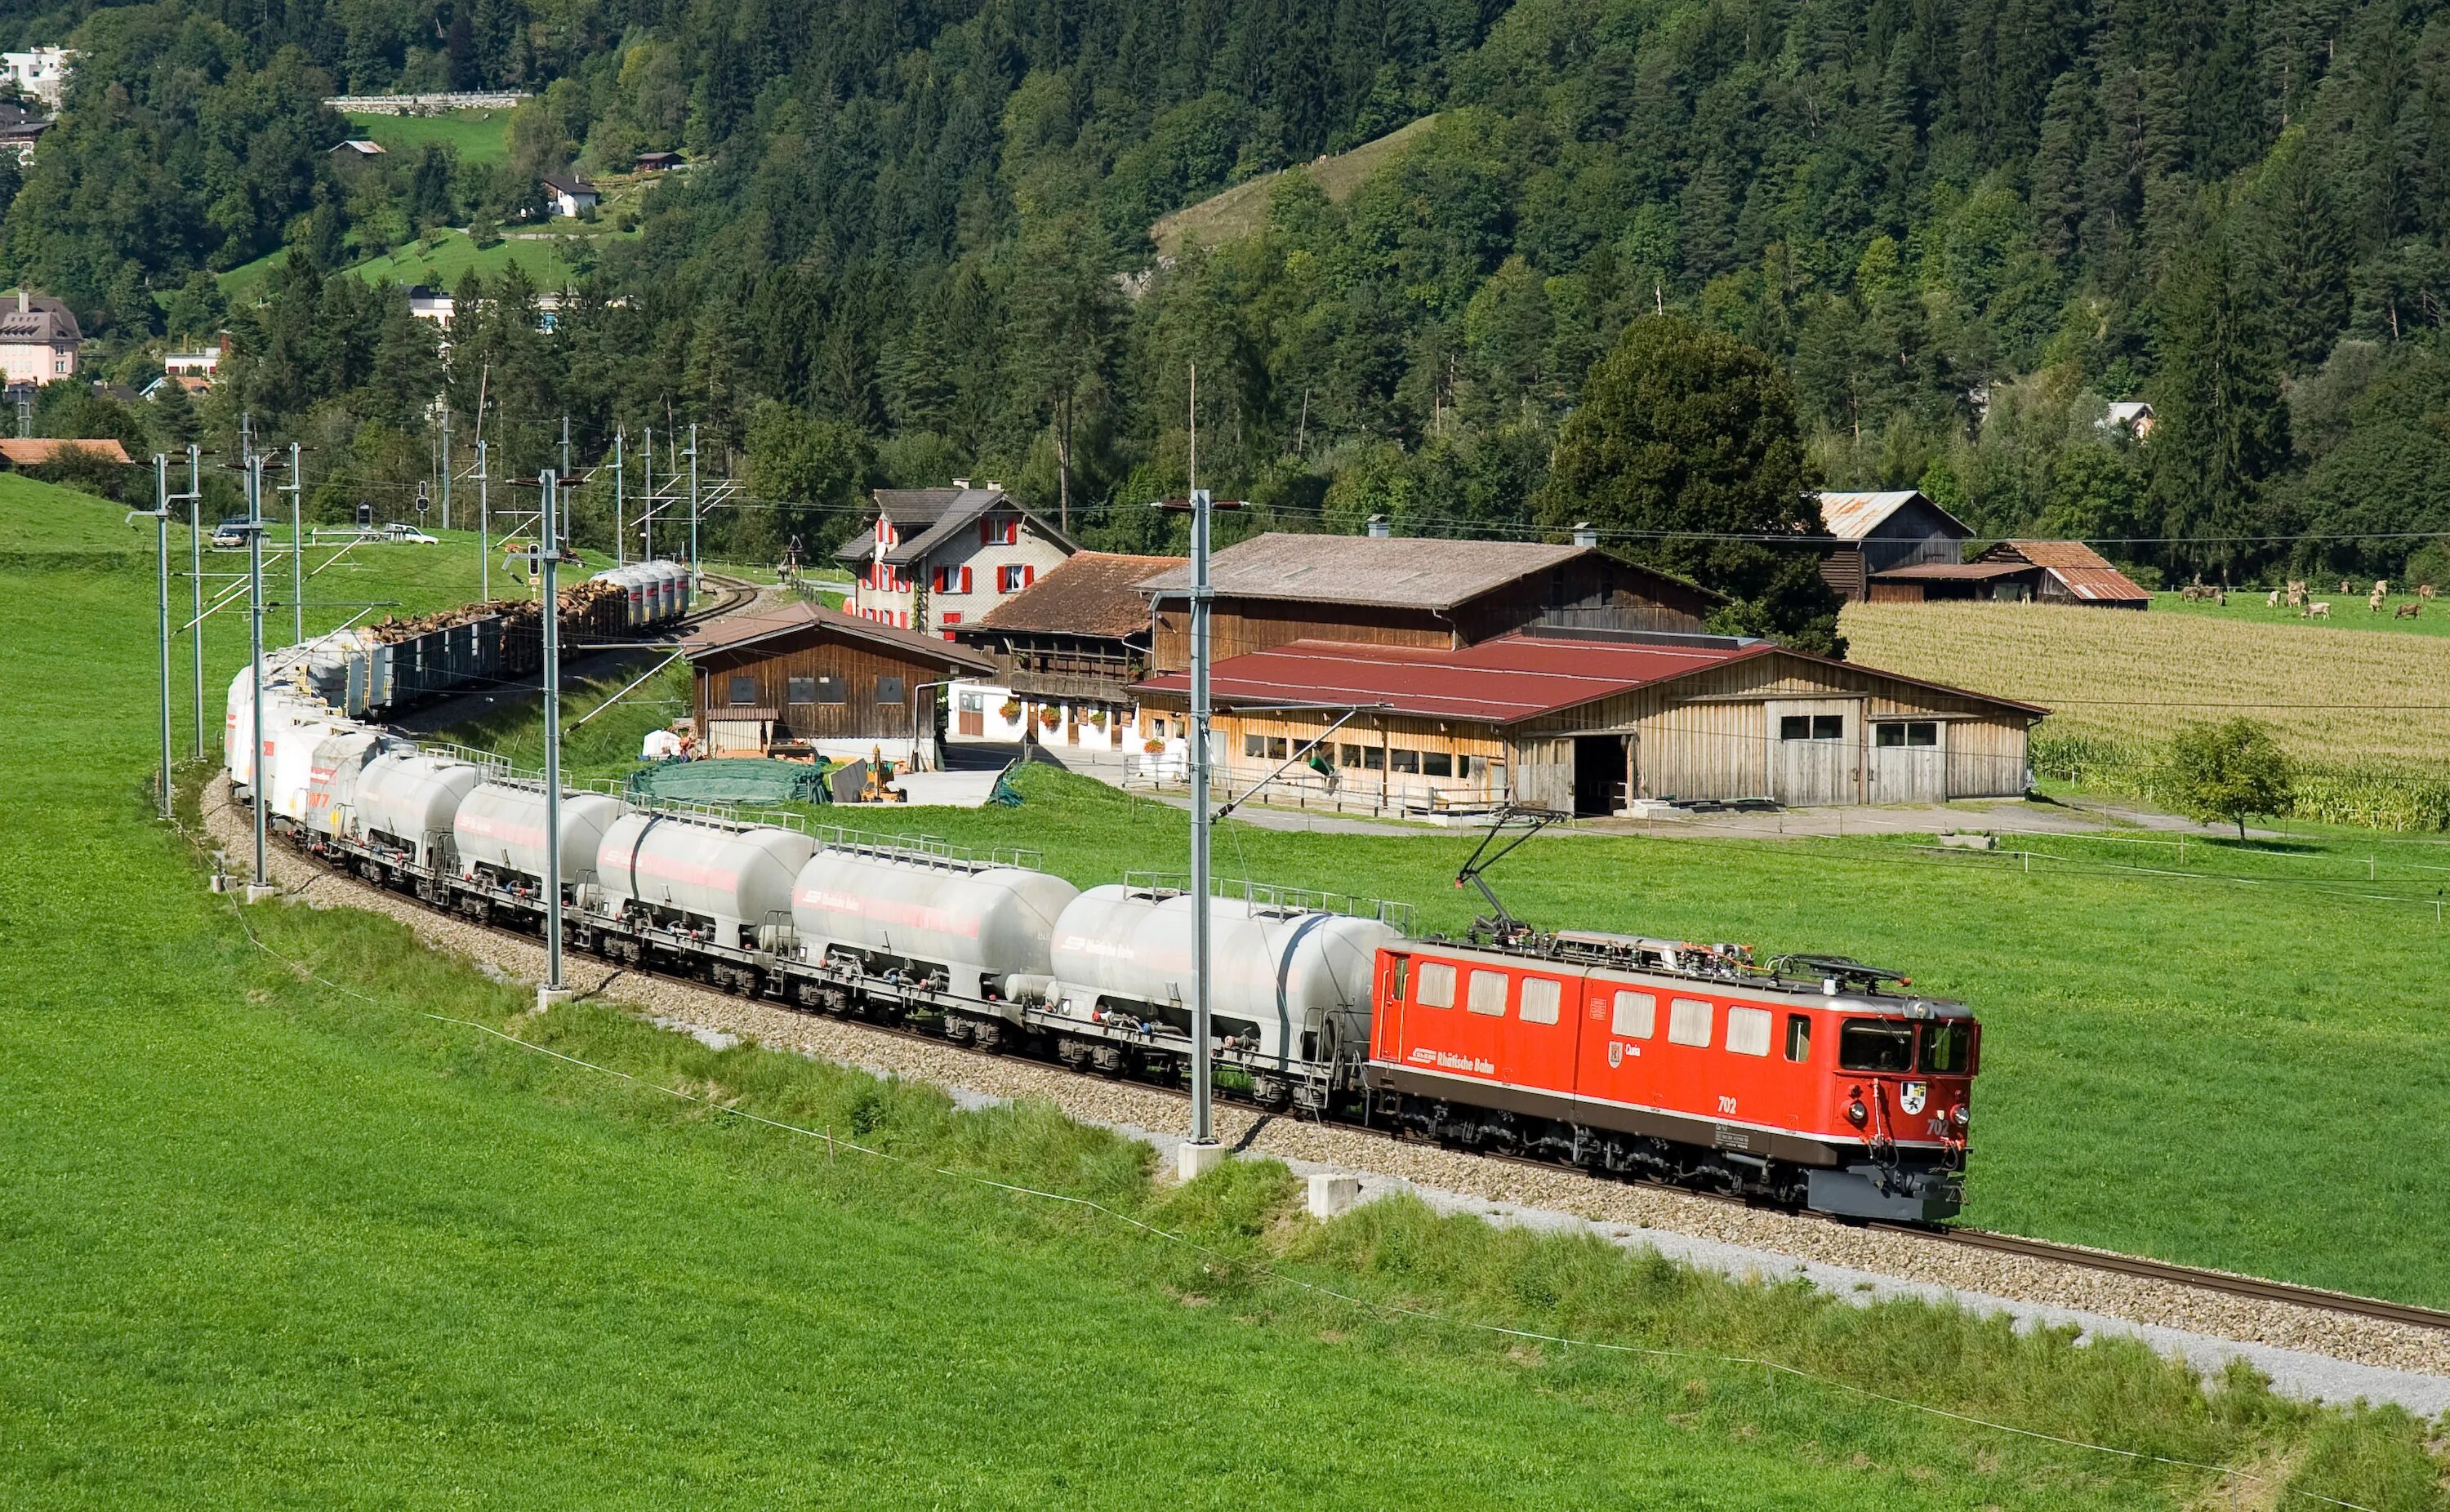 Railway build. Rhaetian Railway ge 6/6 II локомотивы Швейцарии. RHB ge 6/6 II. RHB поезда. Локомотив ge 6/6.